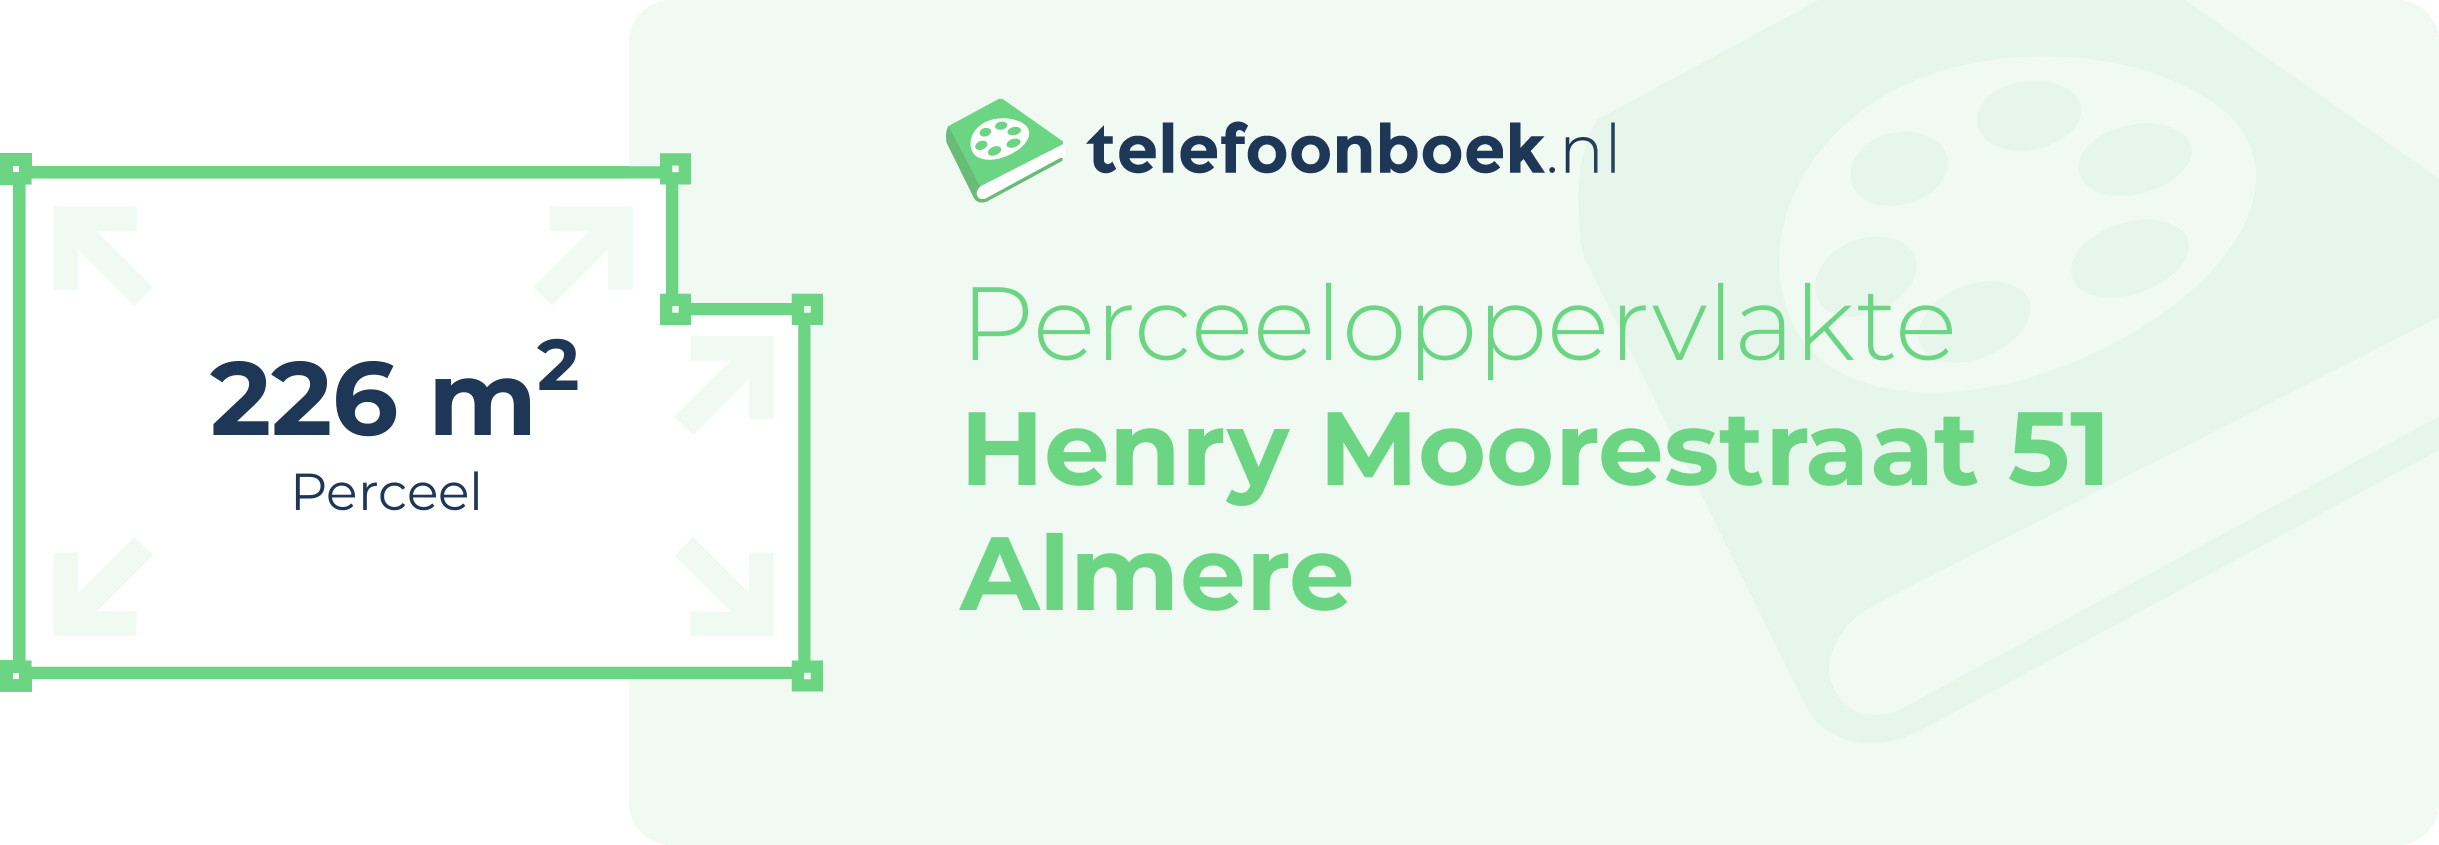 Perceeloppervlakte Henry Moorestraat 51 Almere